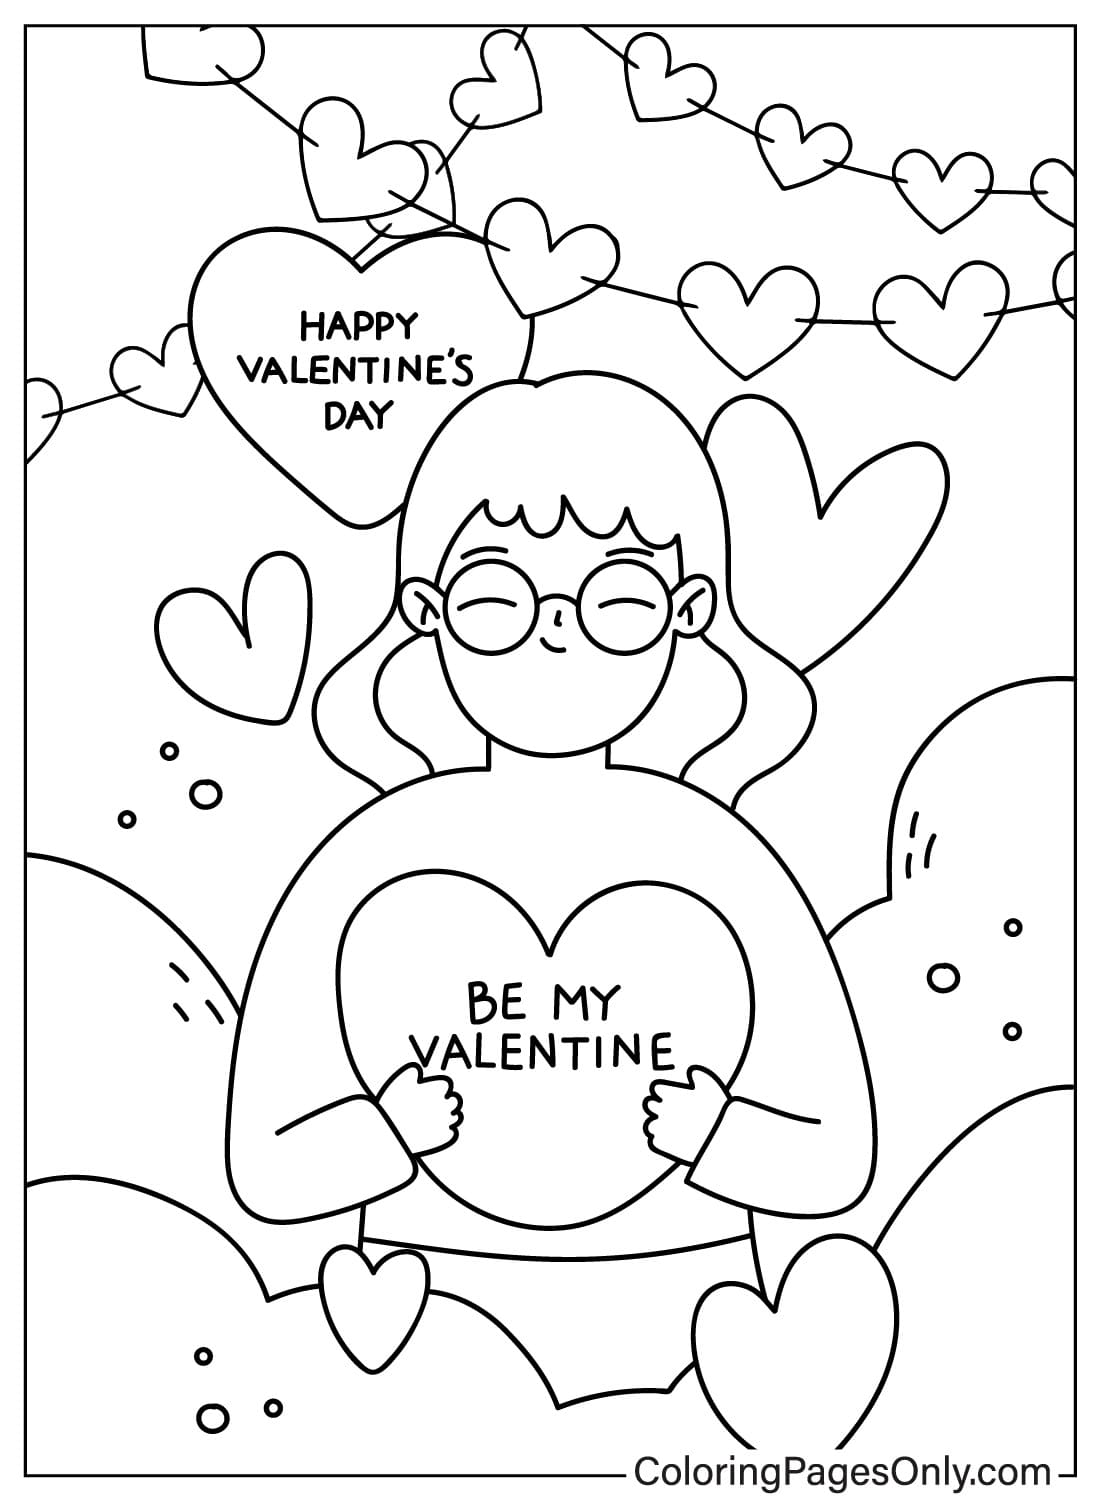 Раскраска ко Дню святого Валентина из открыток ко Дню святого Валентина